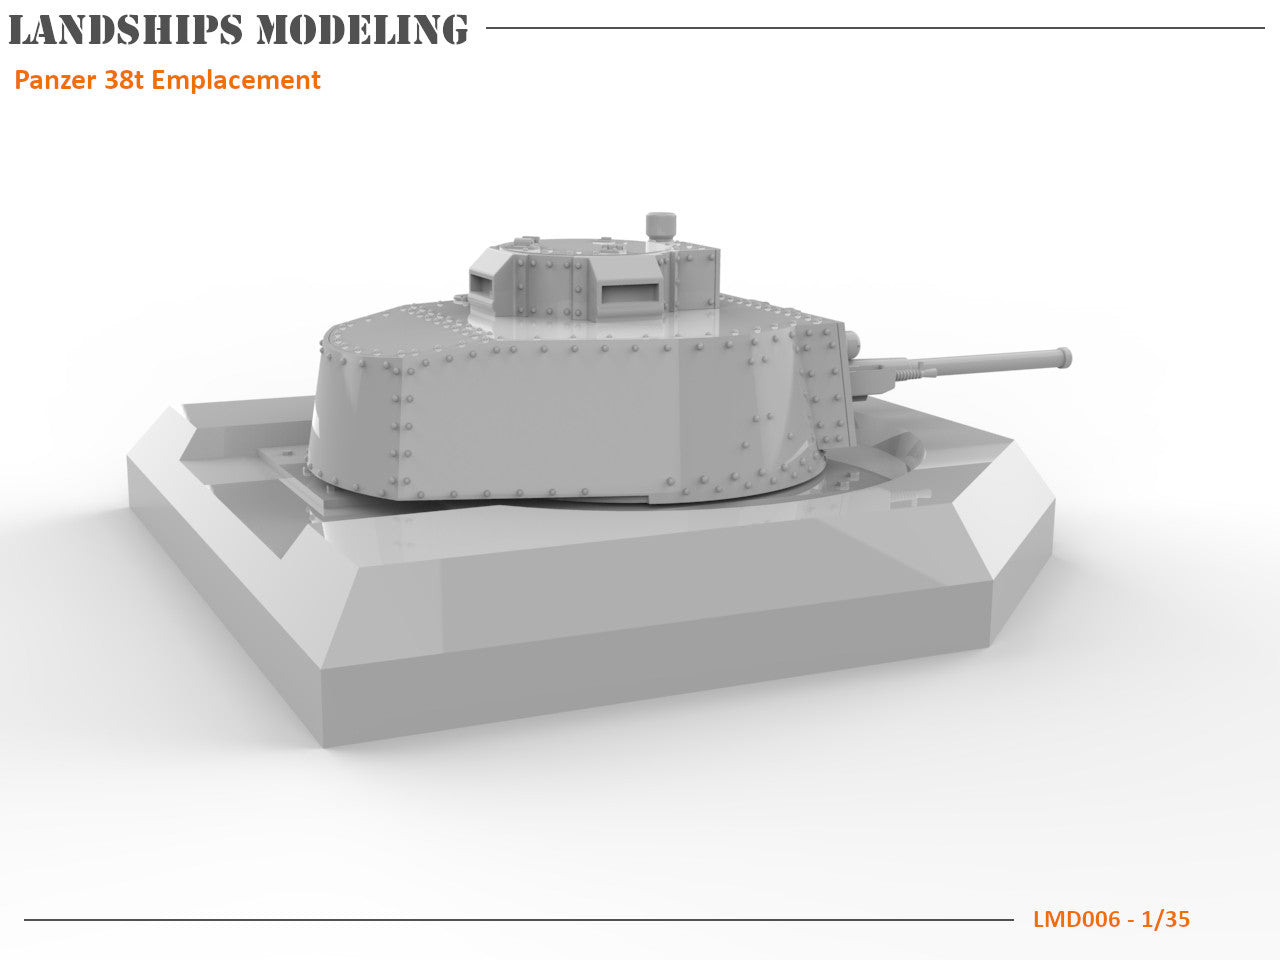 LMD006 - Panzer 38t Emplacement